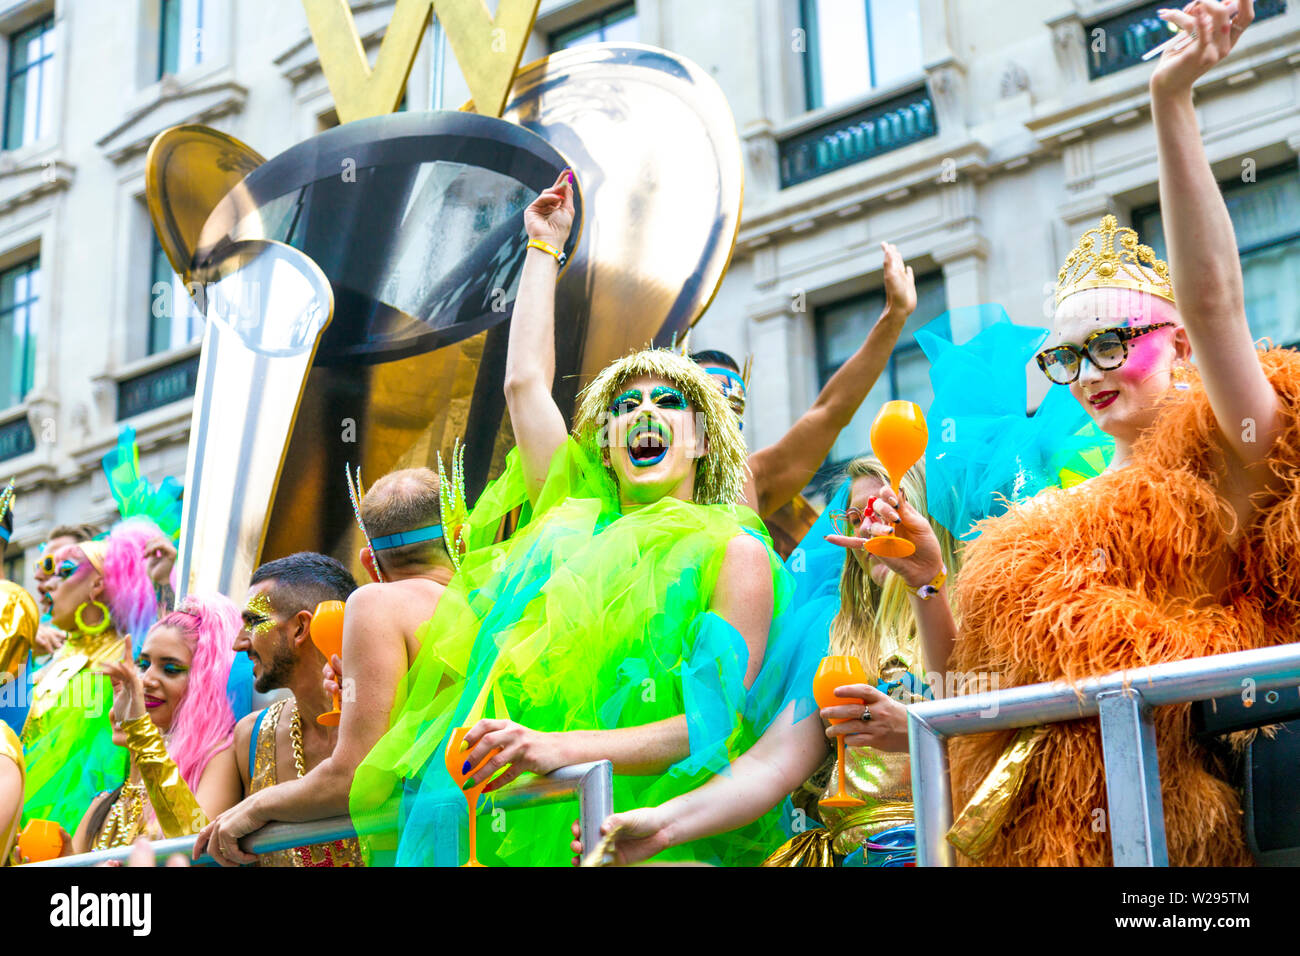 6 July 2019 - Dressed up people celebrating on a float, London Pride Parade, UK Stock Photo